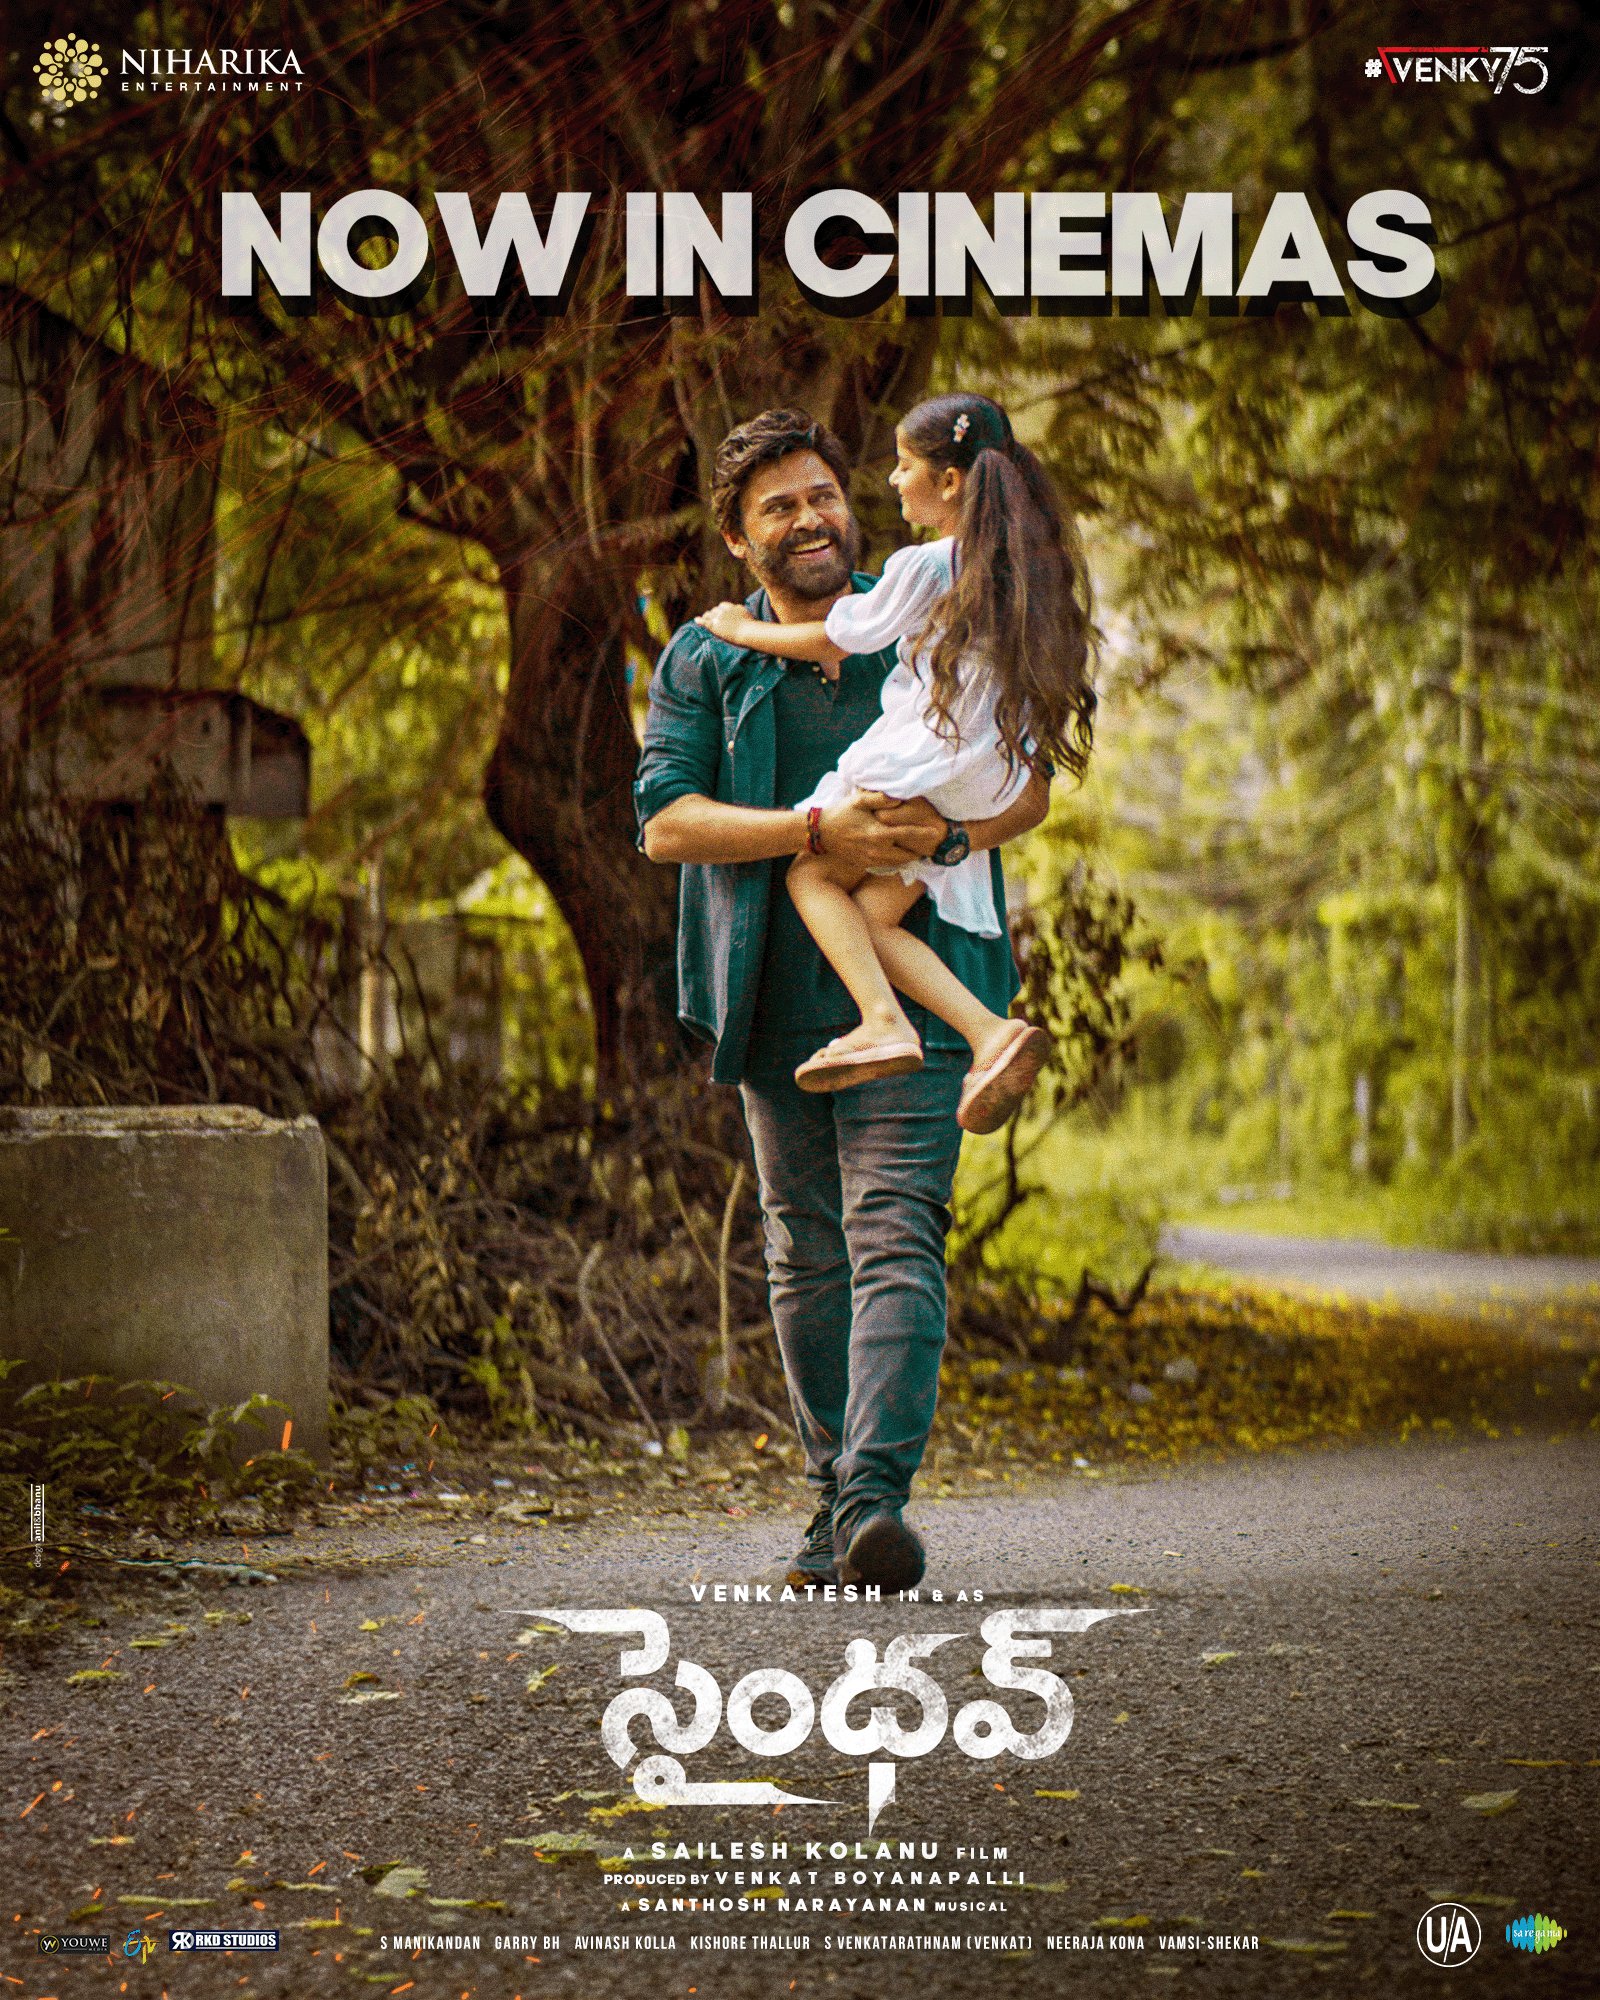 Saindhav Movie Poster